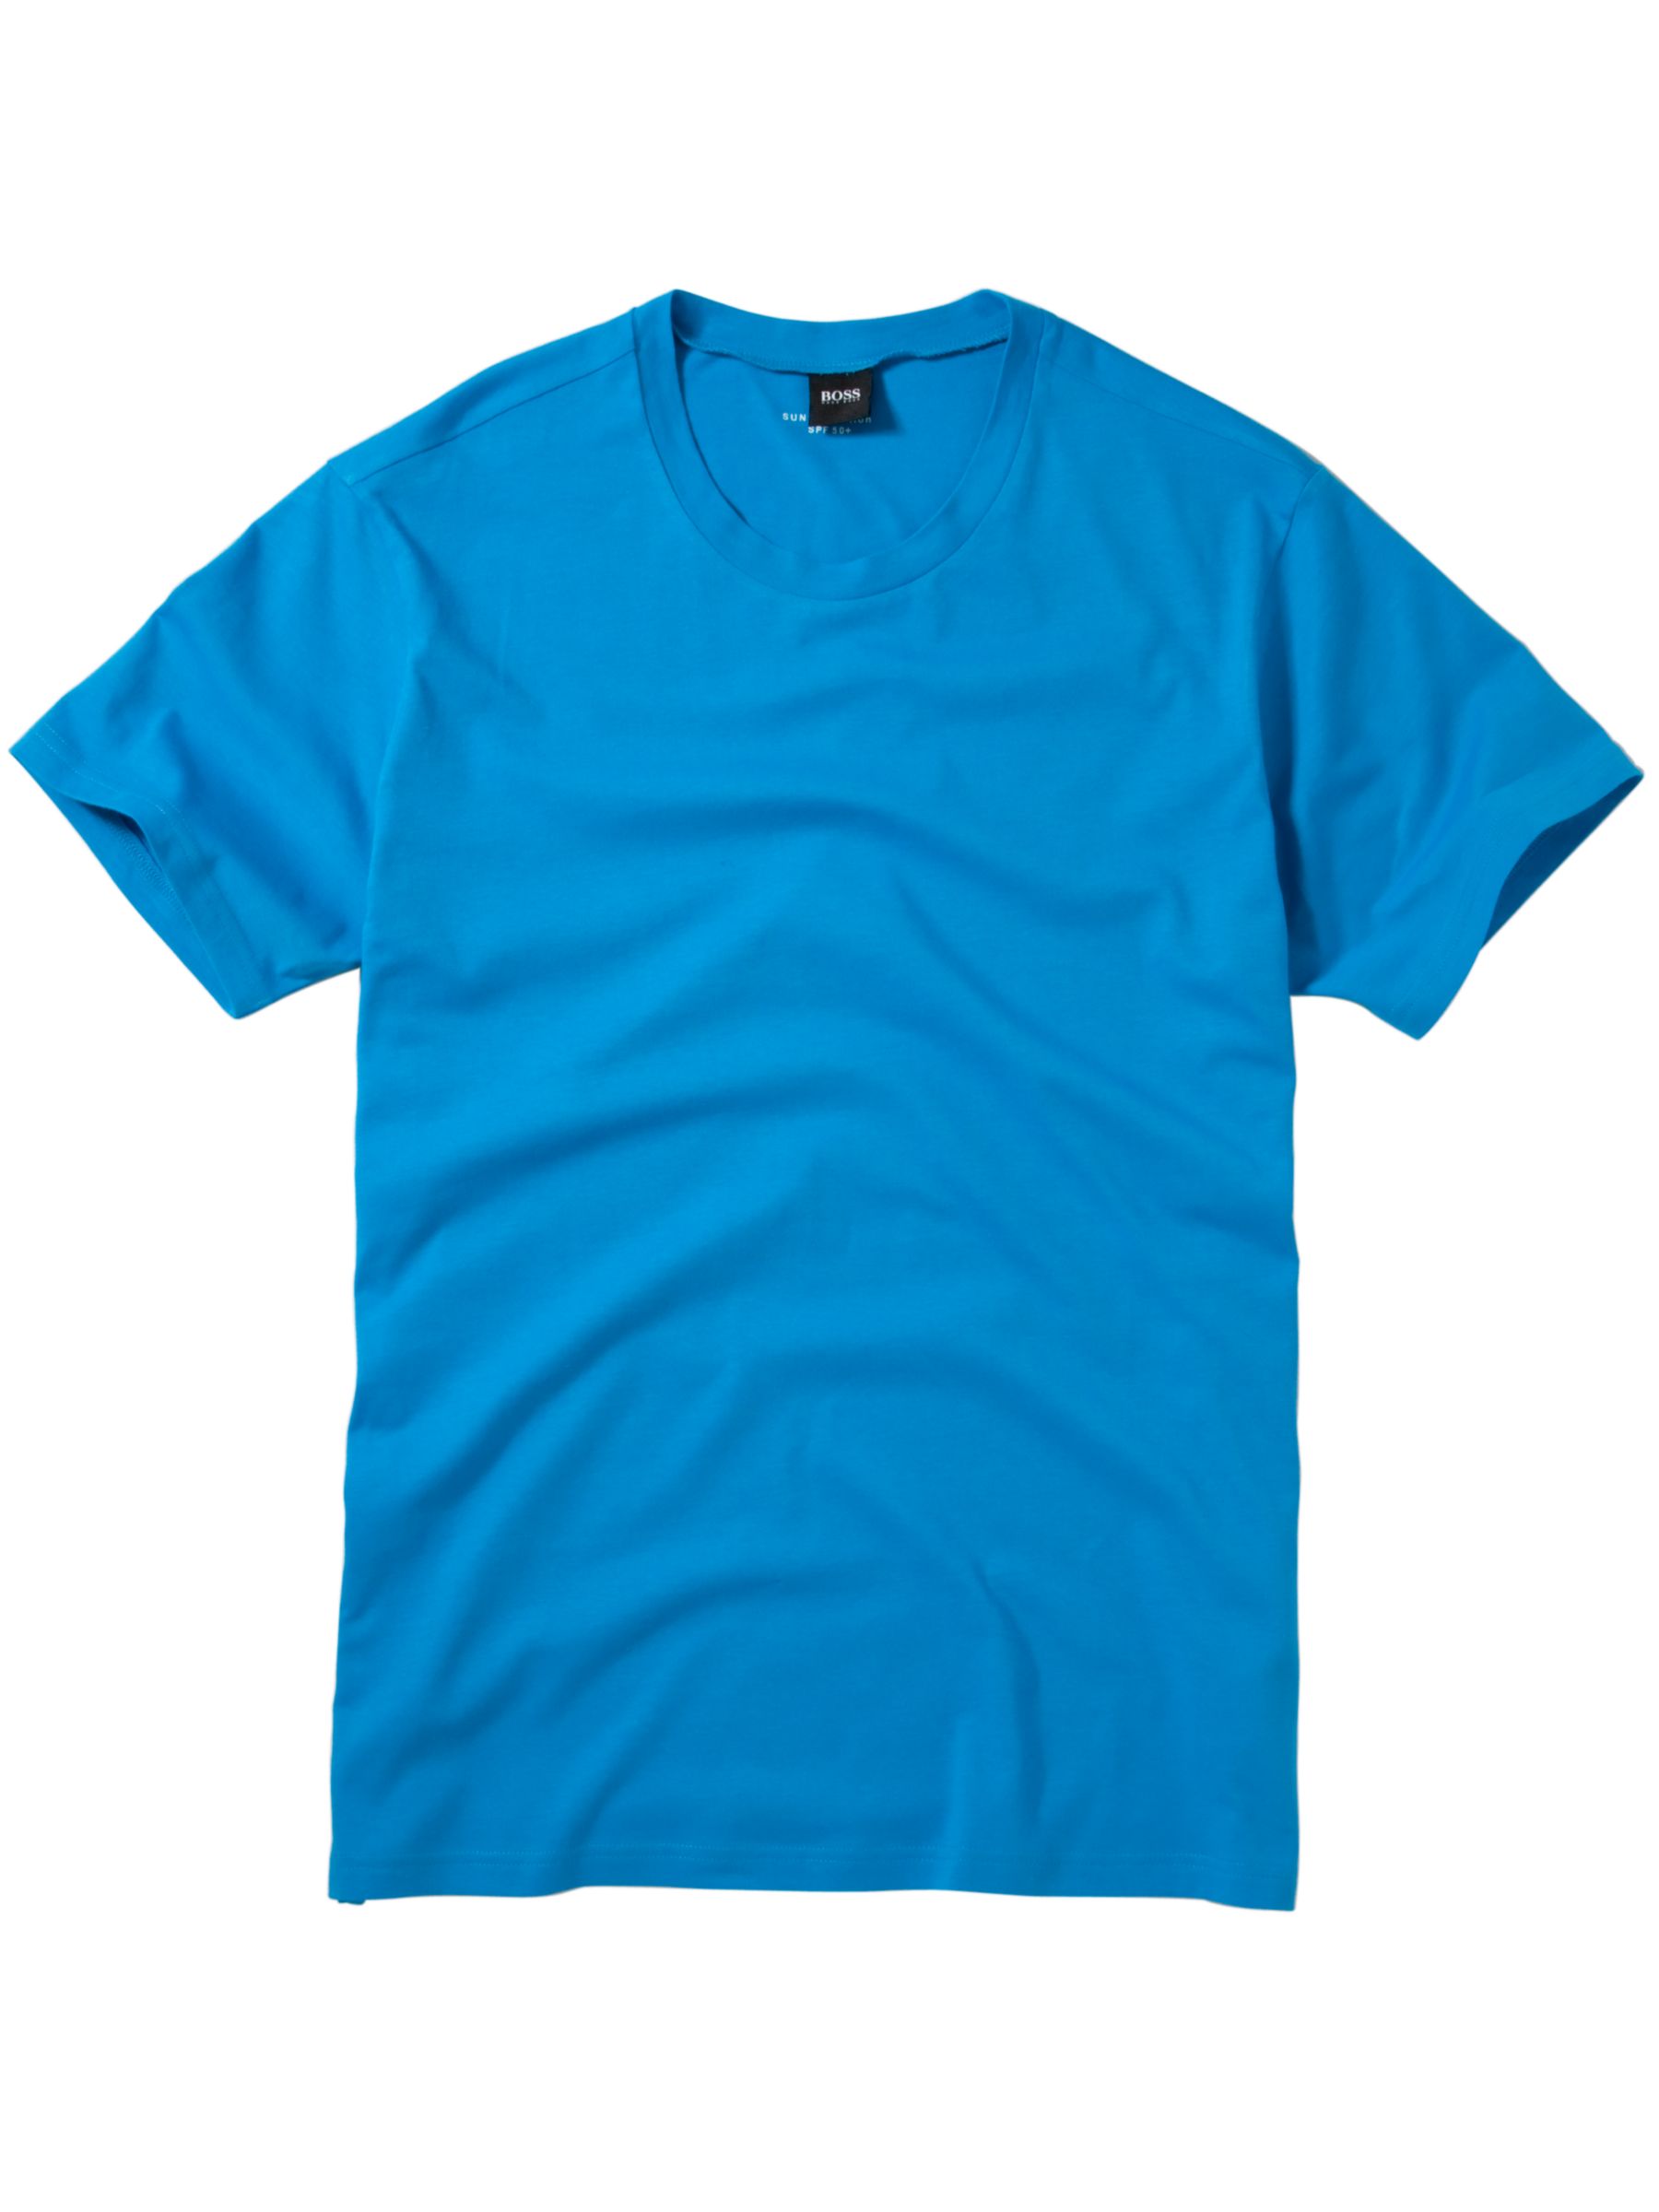 Hugo Boss Beach Logo T-Shirt, Turquoise